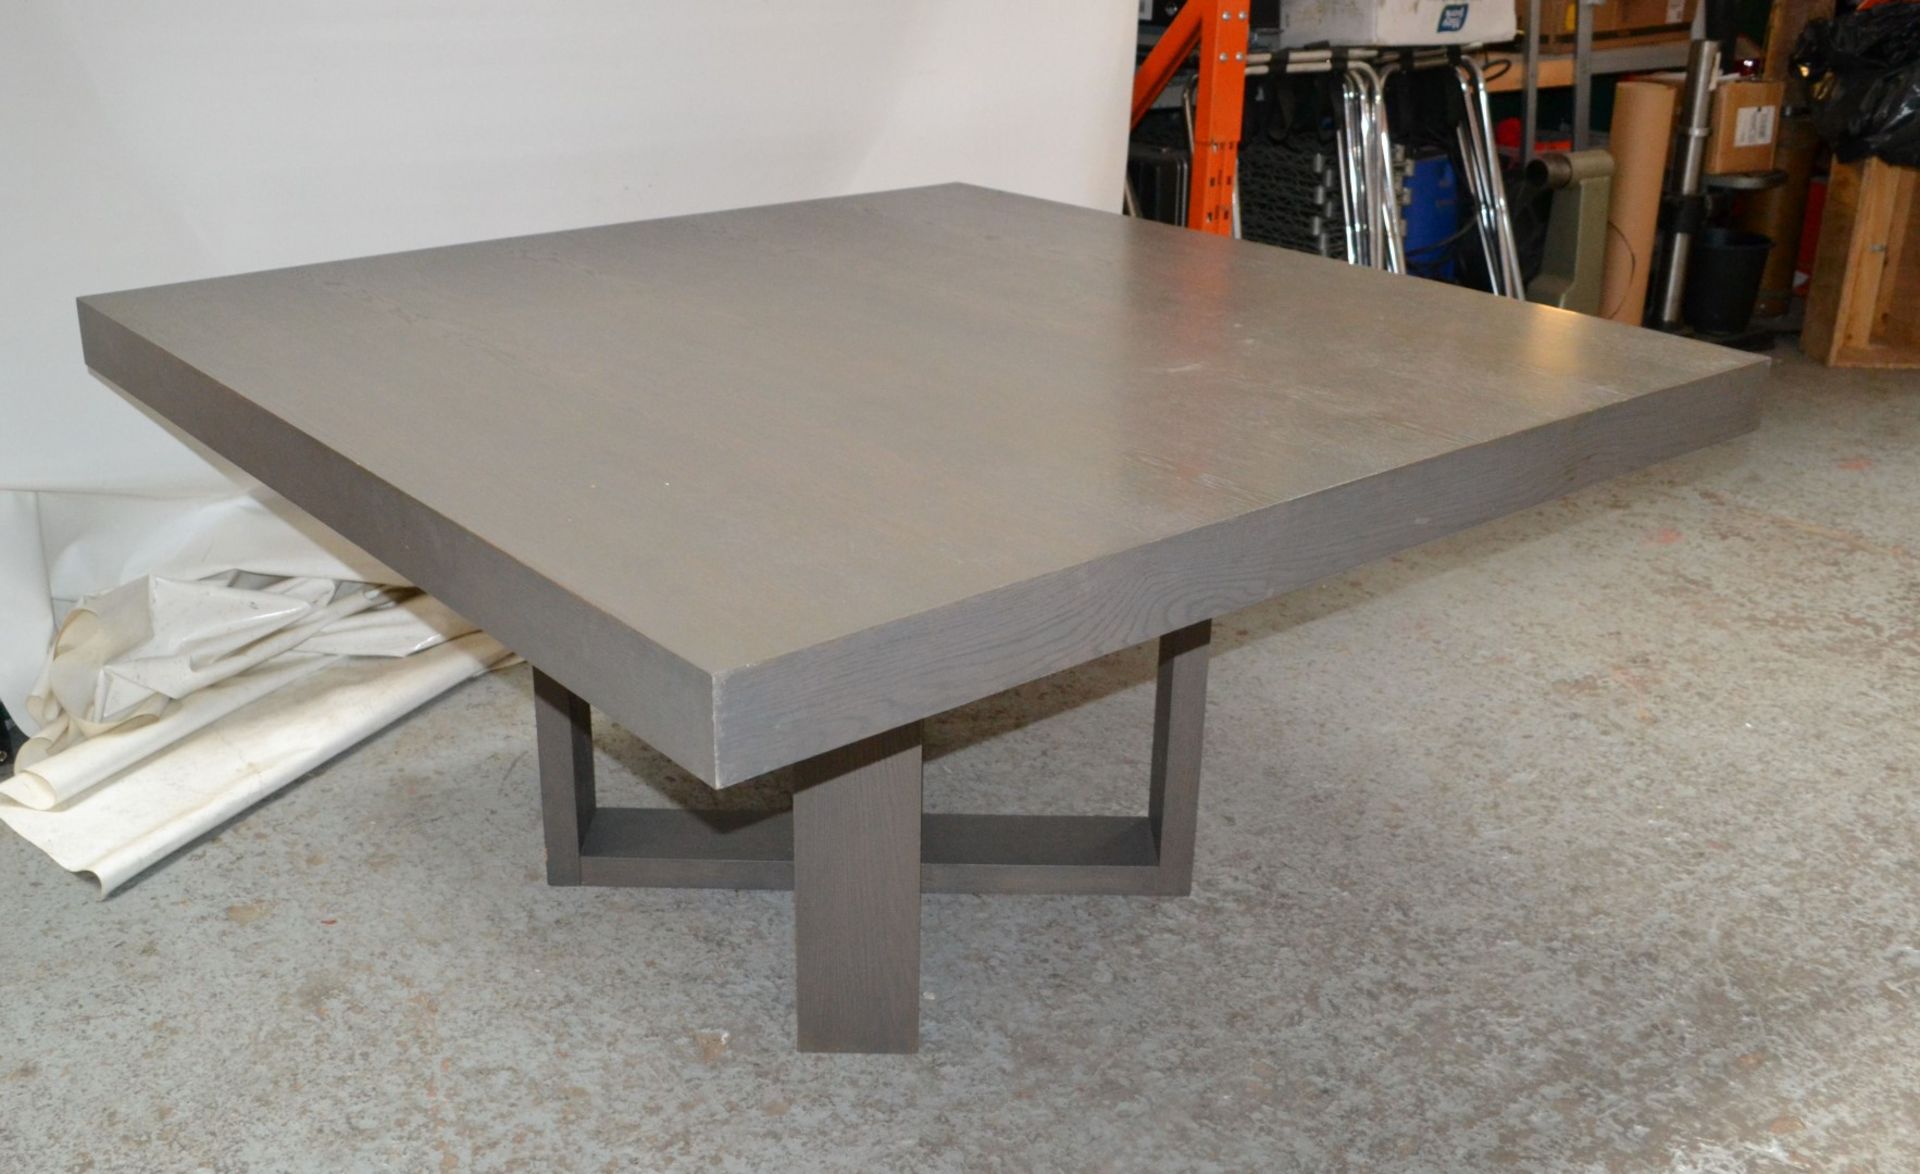 1 x Large Square Wooden Table in Grey Oak Coloured Finish - CL314 - Location: Altrincham WA14 - *NO